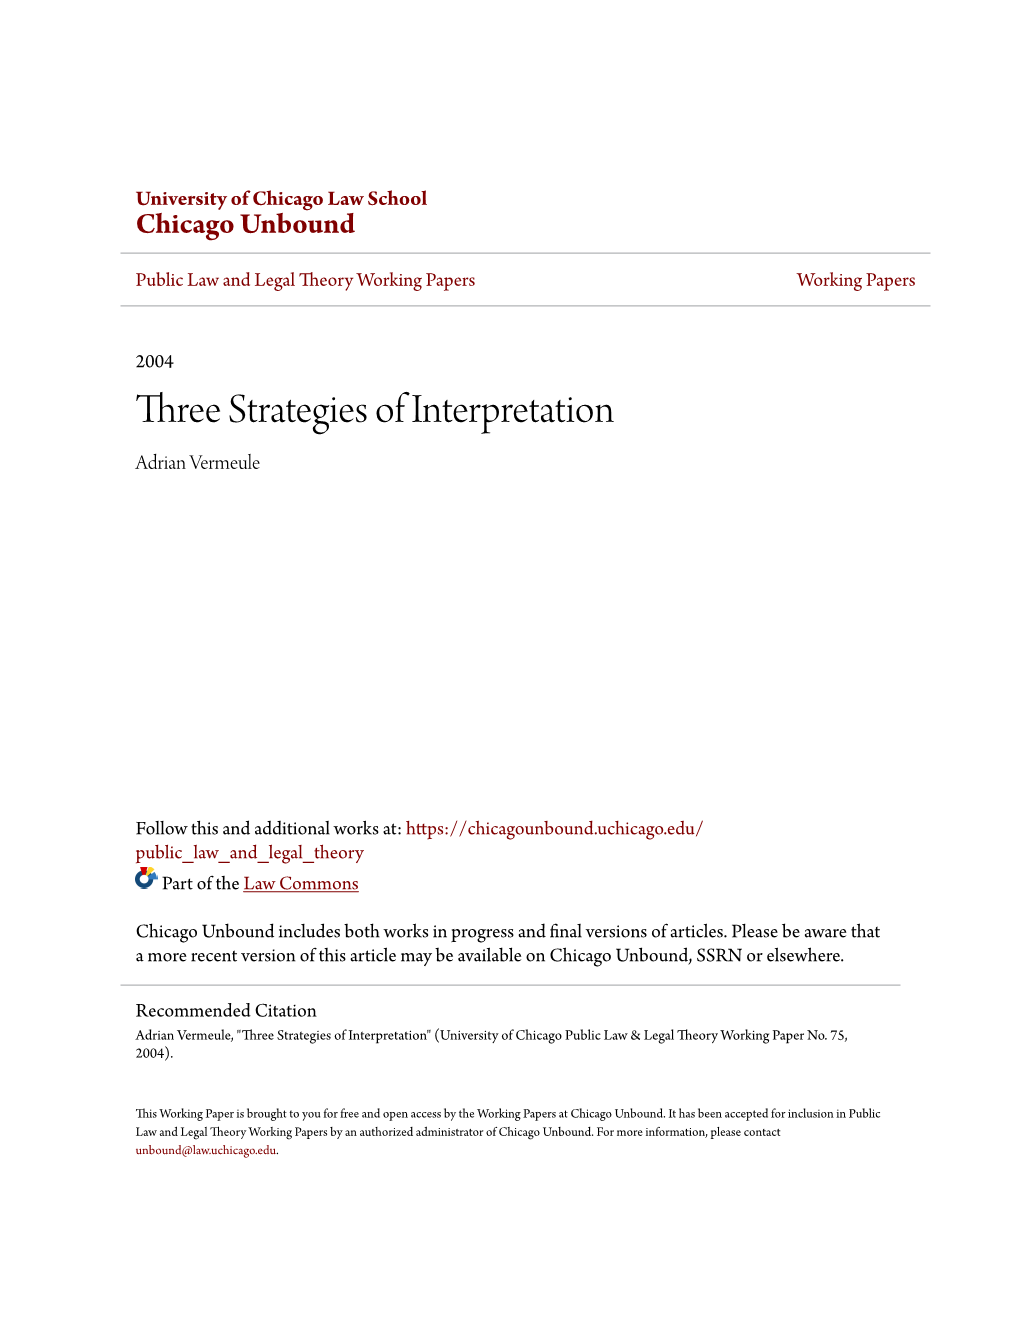 Three Strategies of Interpretation Adrian Vermeule